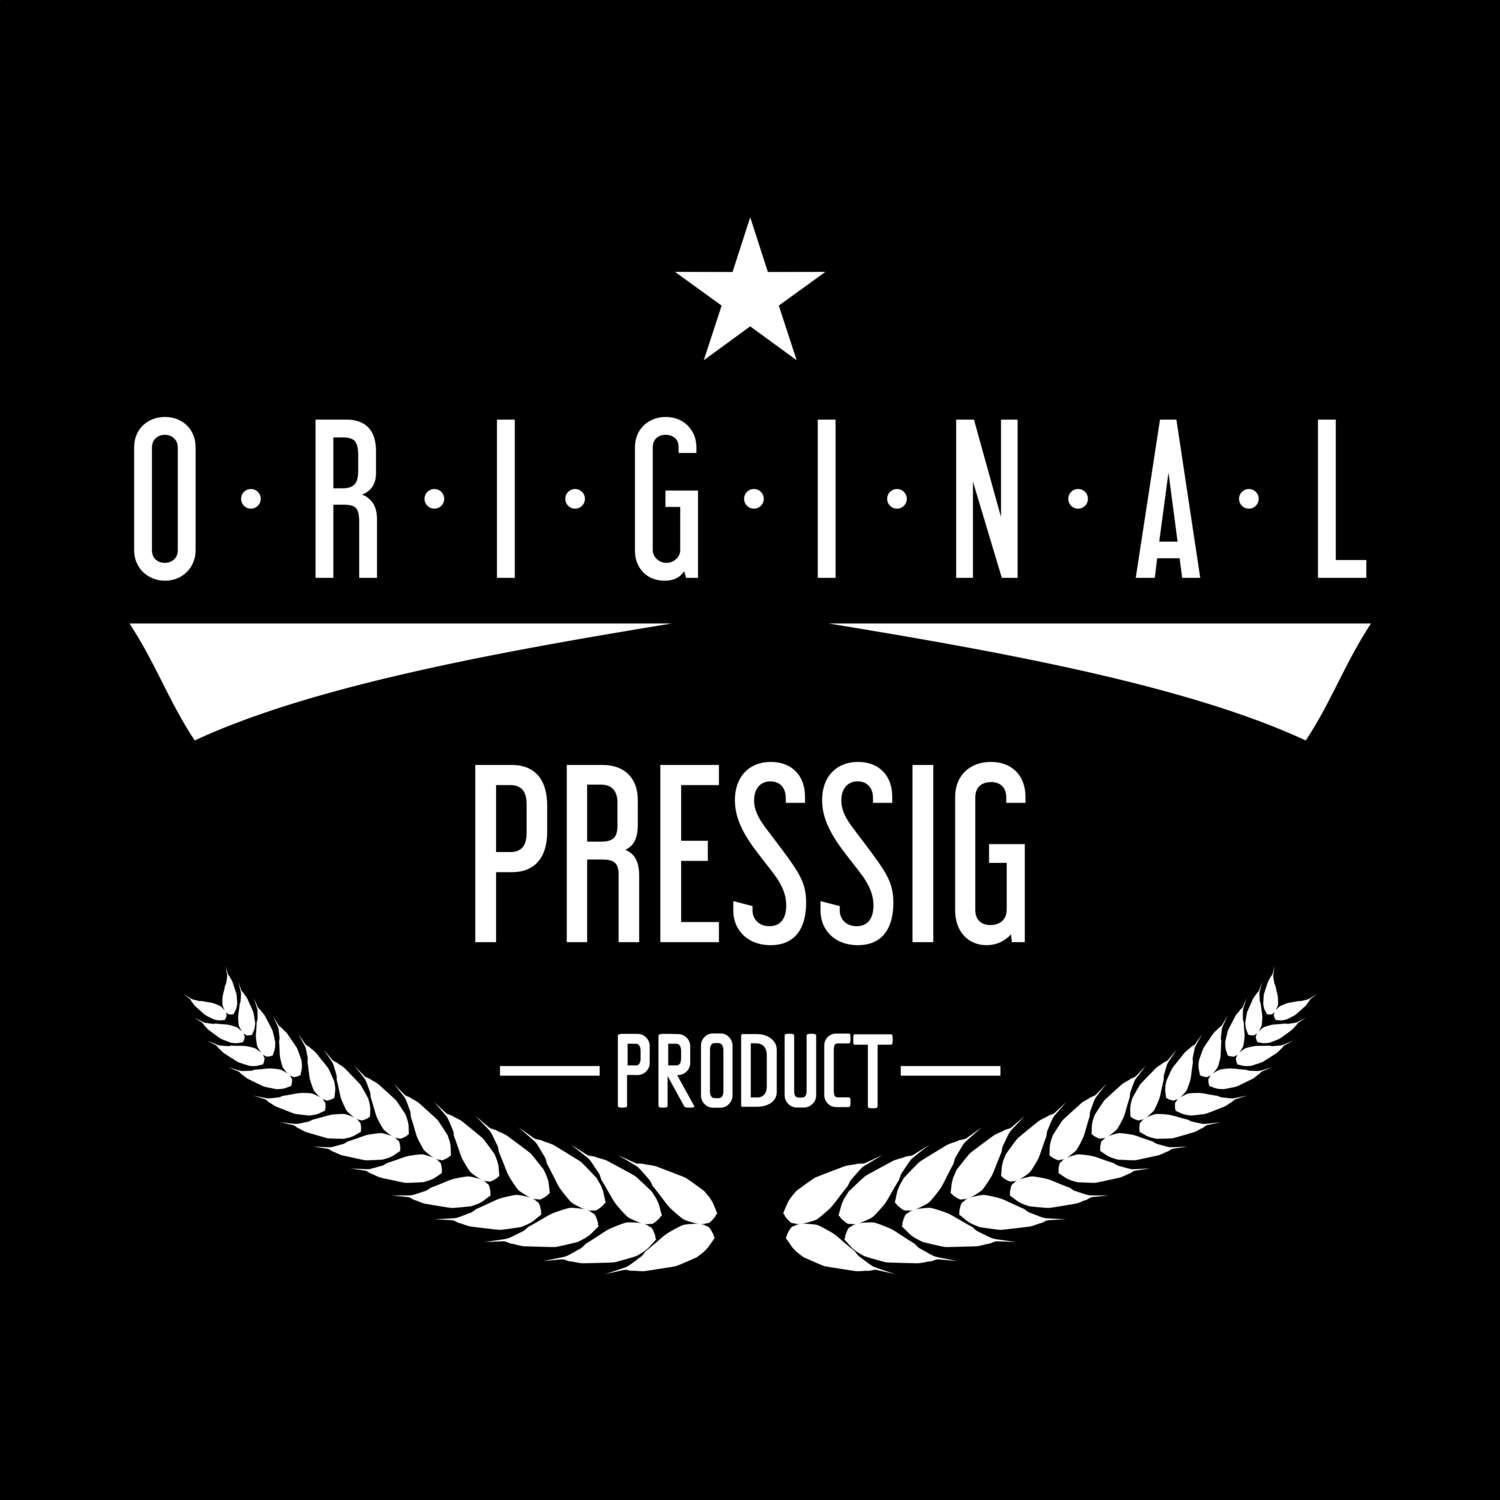 Pressig T-Shirt »Original Product«